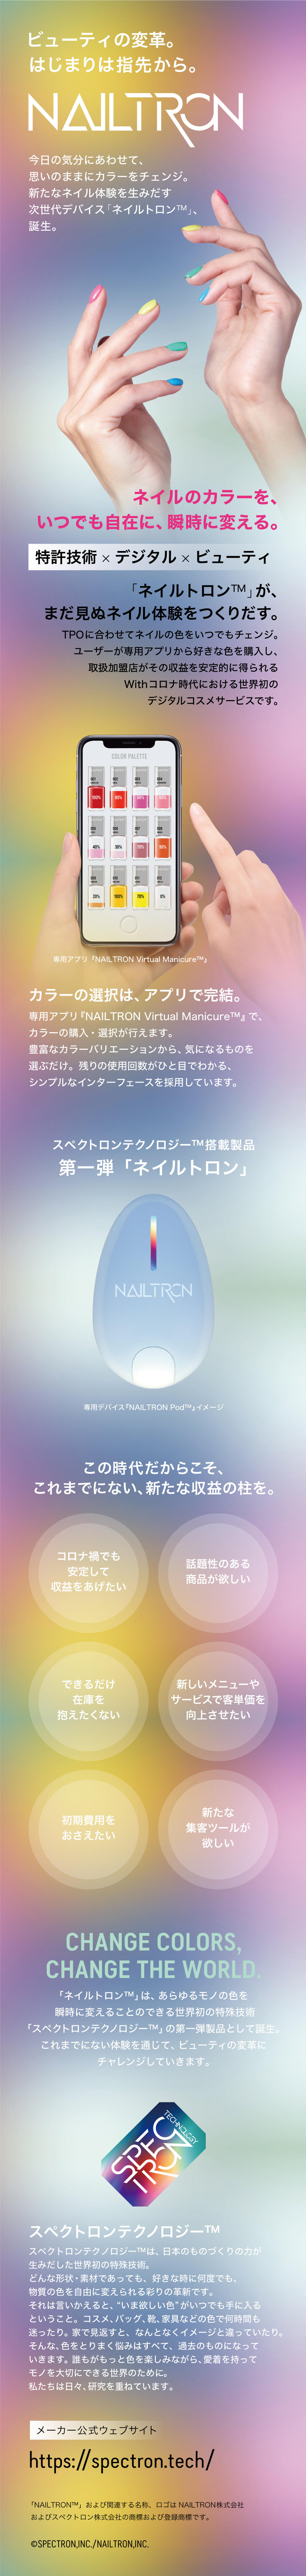 NAILTRON (ネイルトロン) 正規代理店 | 株式会社ARAYZ (アレイズ)